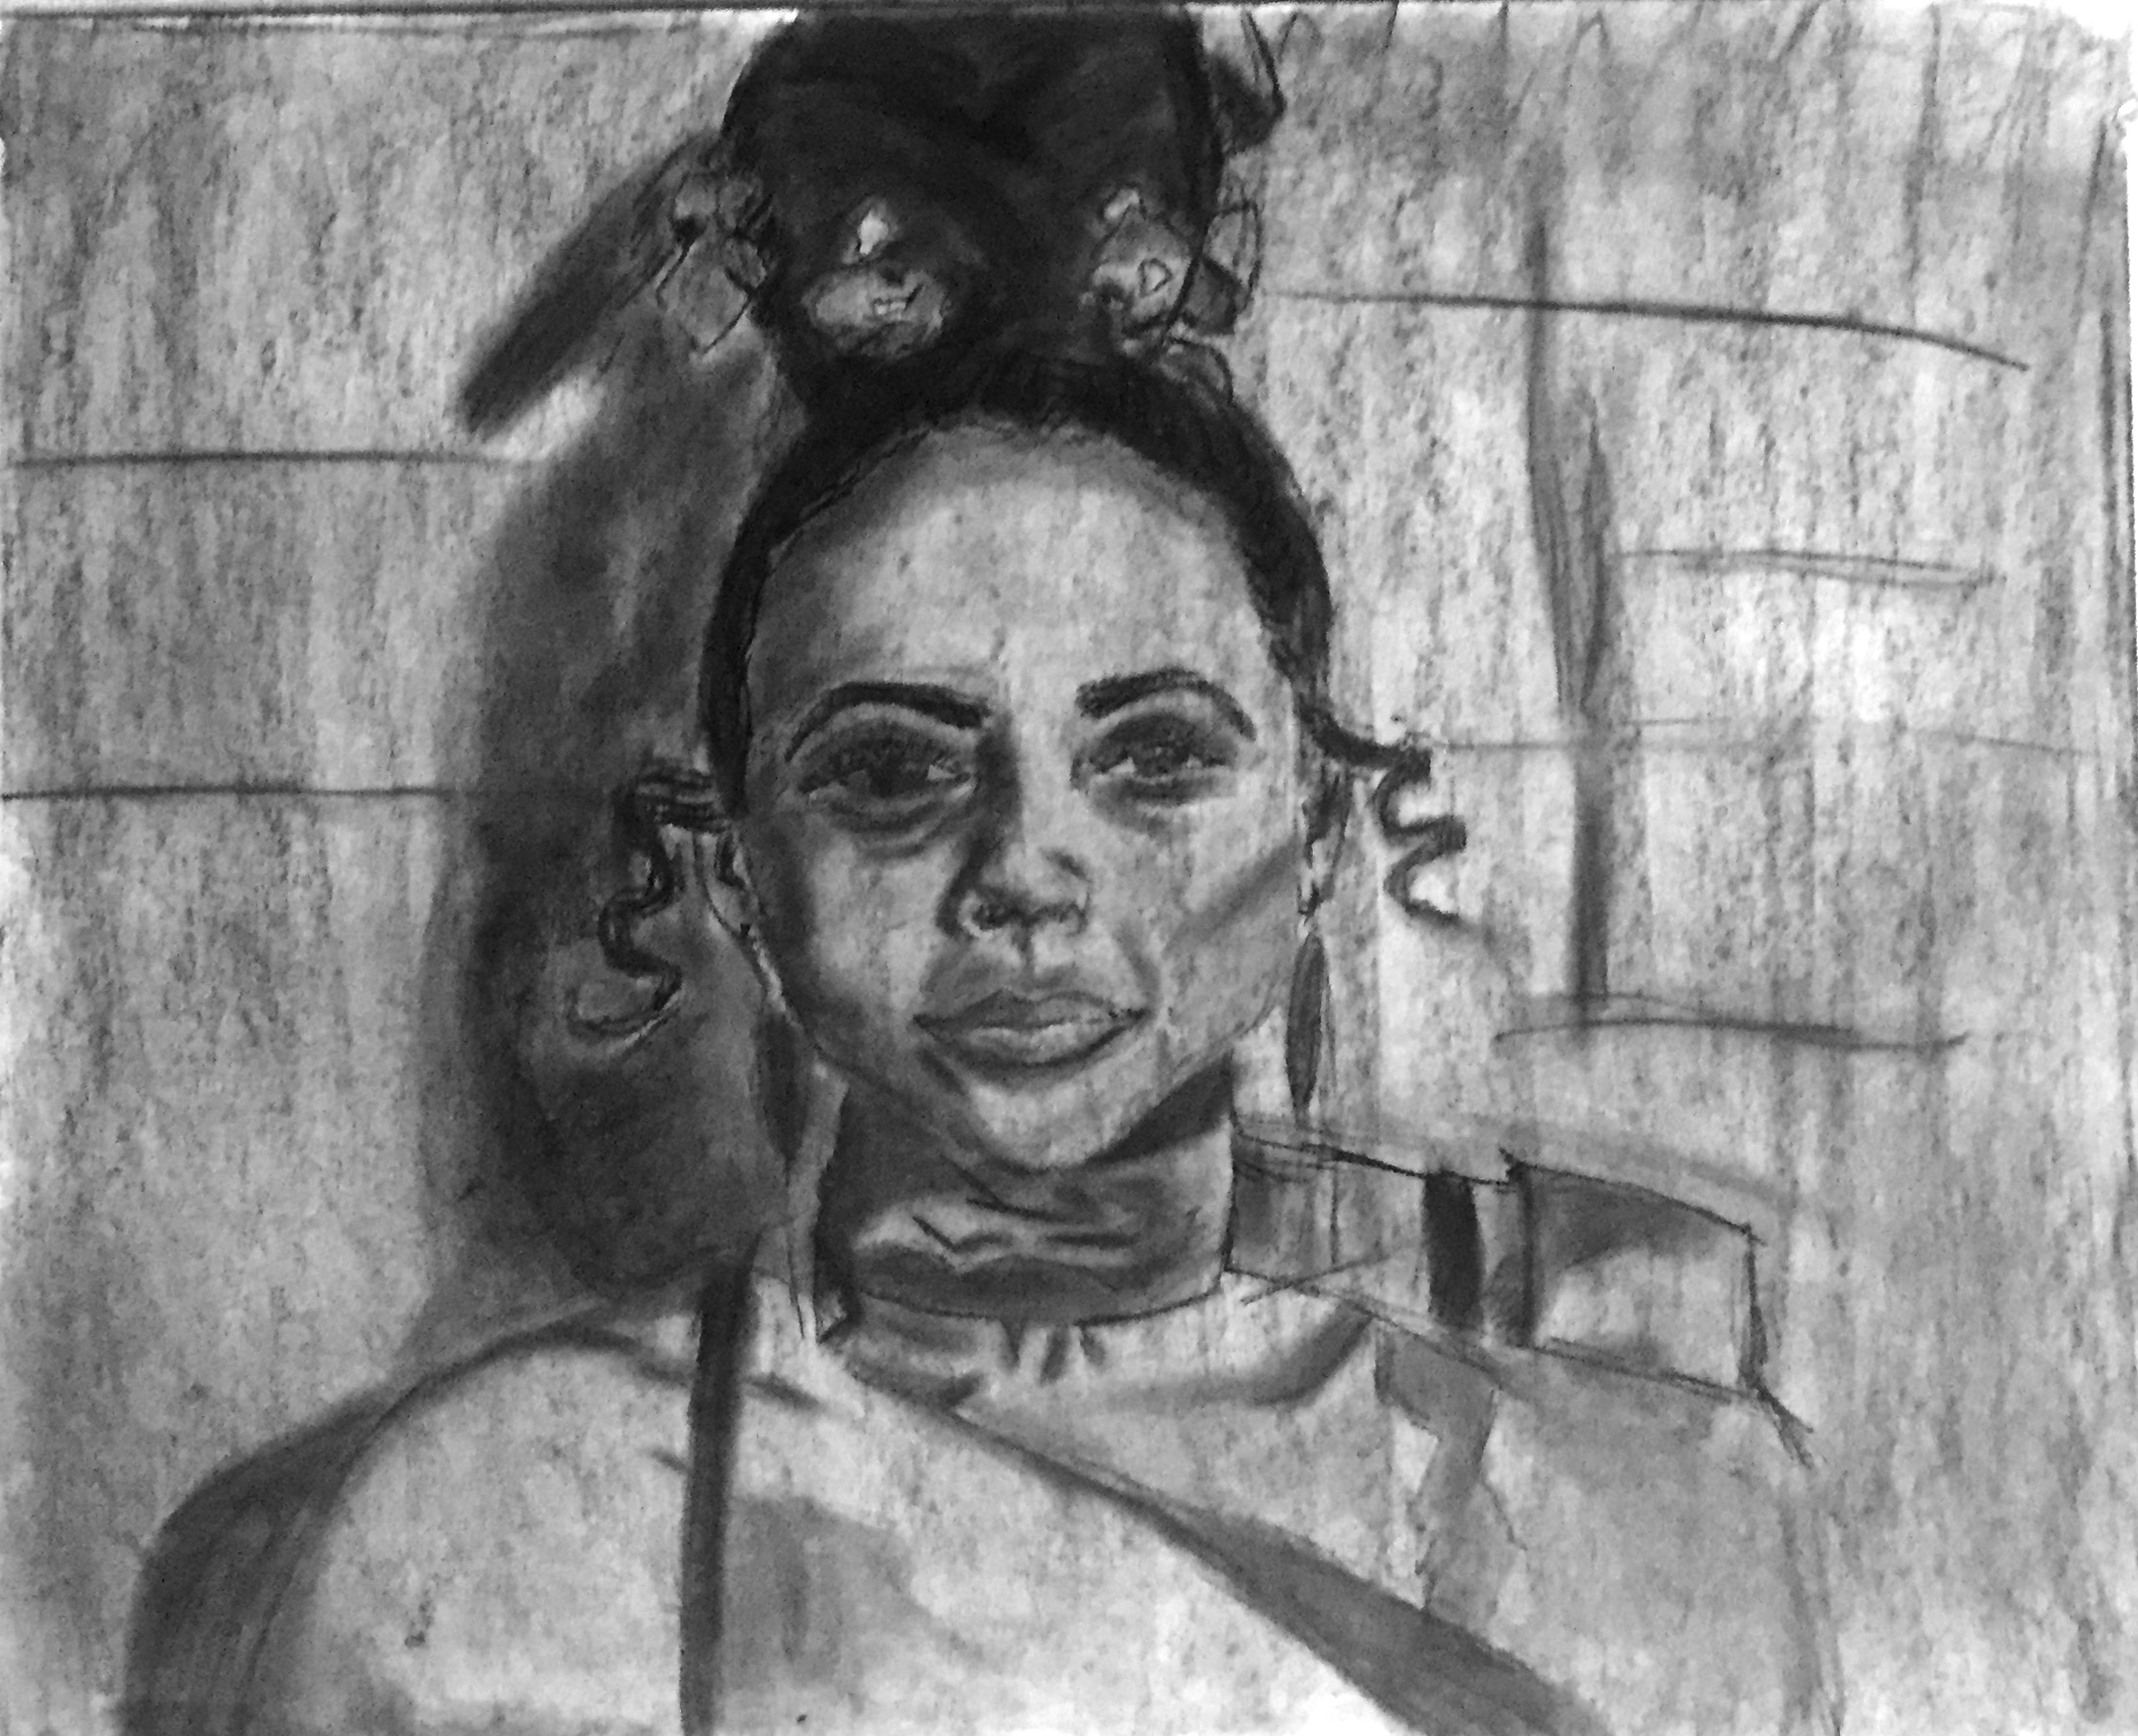 Jada Walker, 30″x22″, Charcoal on Paper, AR202 Figure Drawing, Final Project: Music Video Self Portrait, Spring 2018